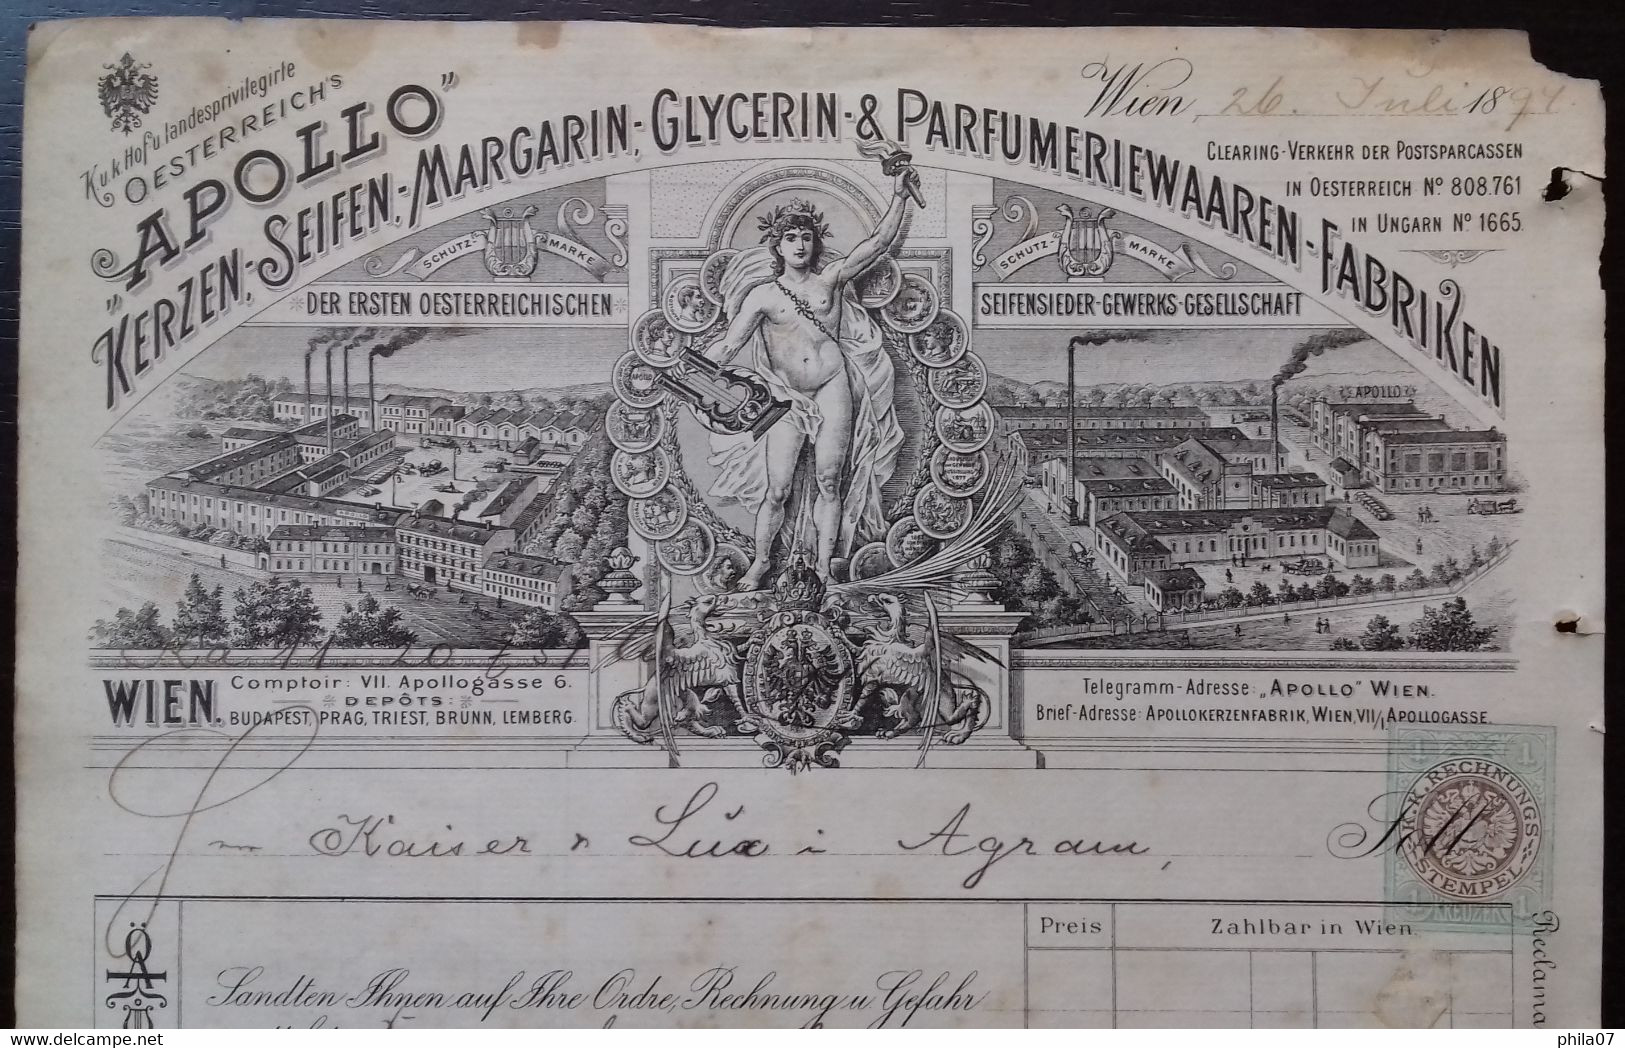 Perfumery Factory, Austria - 'Apollo' Kerzen Seifen Margarin-Glycerin 6 Parfumeriewaaren Fabriken, 1894. - Other & Unclassified